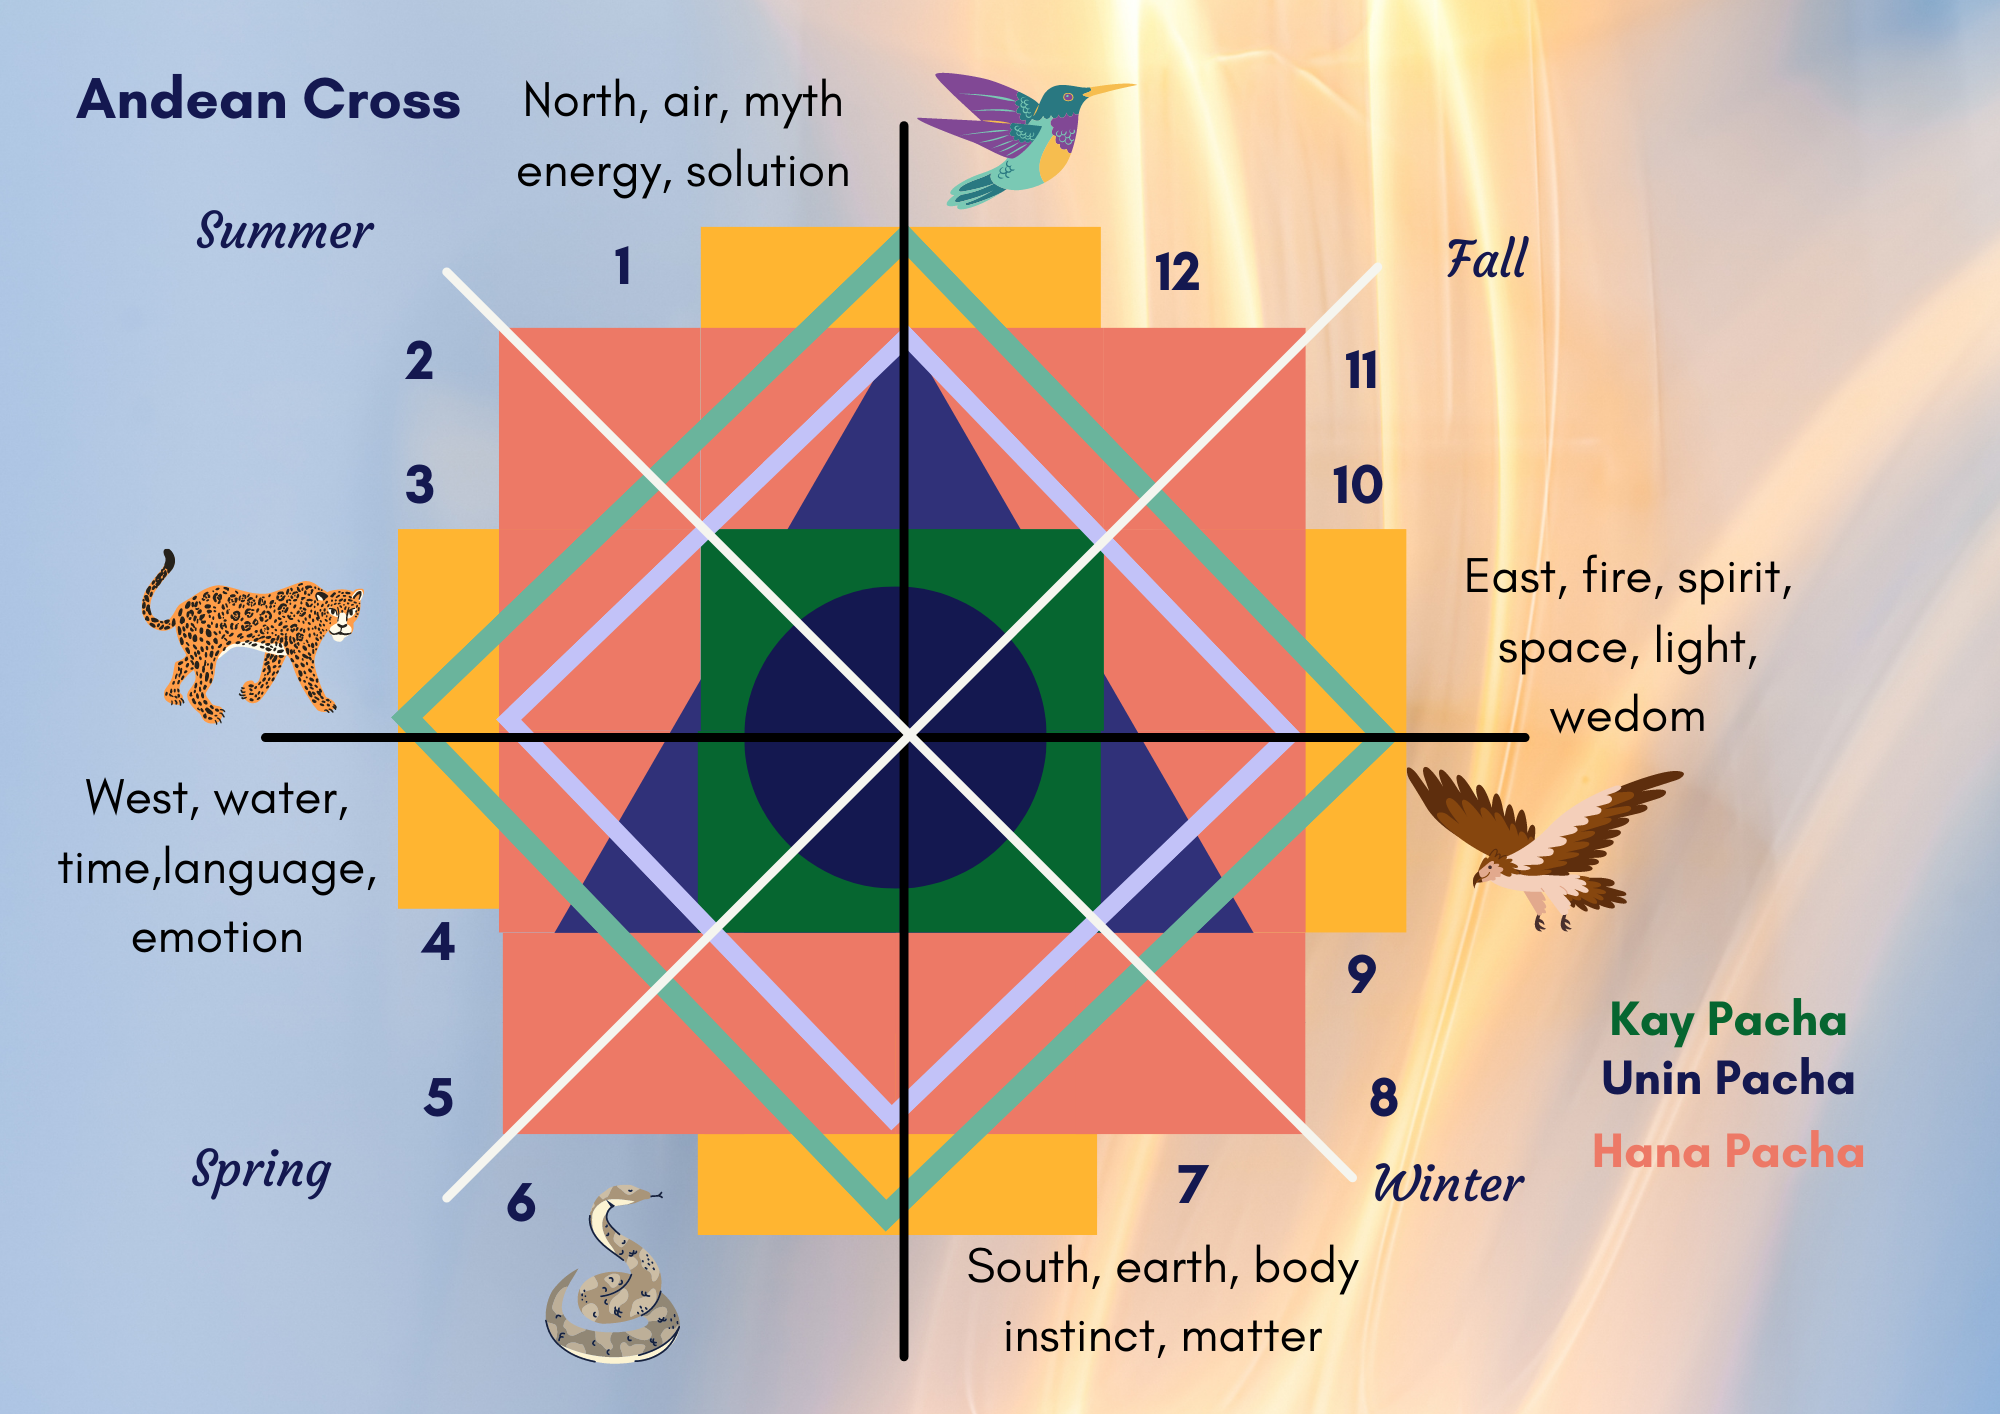 Andean Cross Chakana Shamanism Inka cosmology ethics